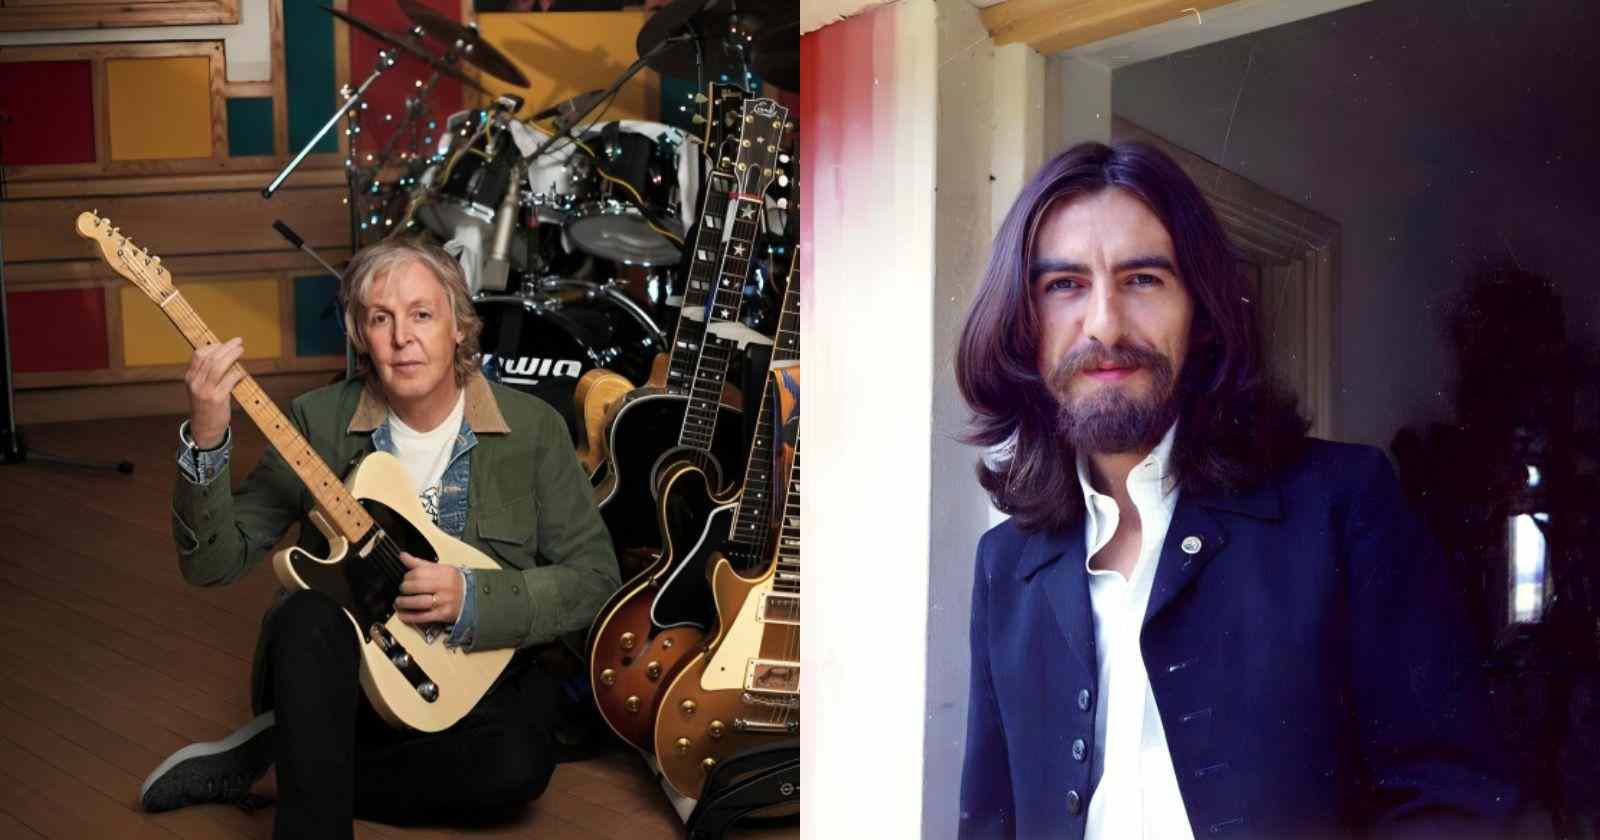 George Harrison and Paul McCartney